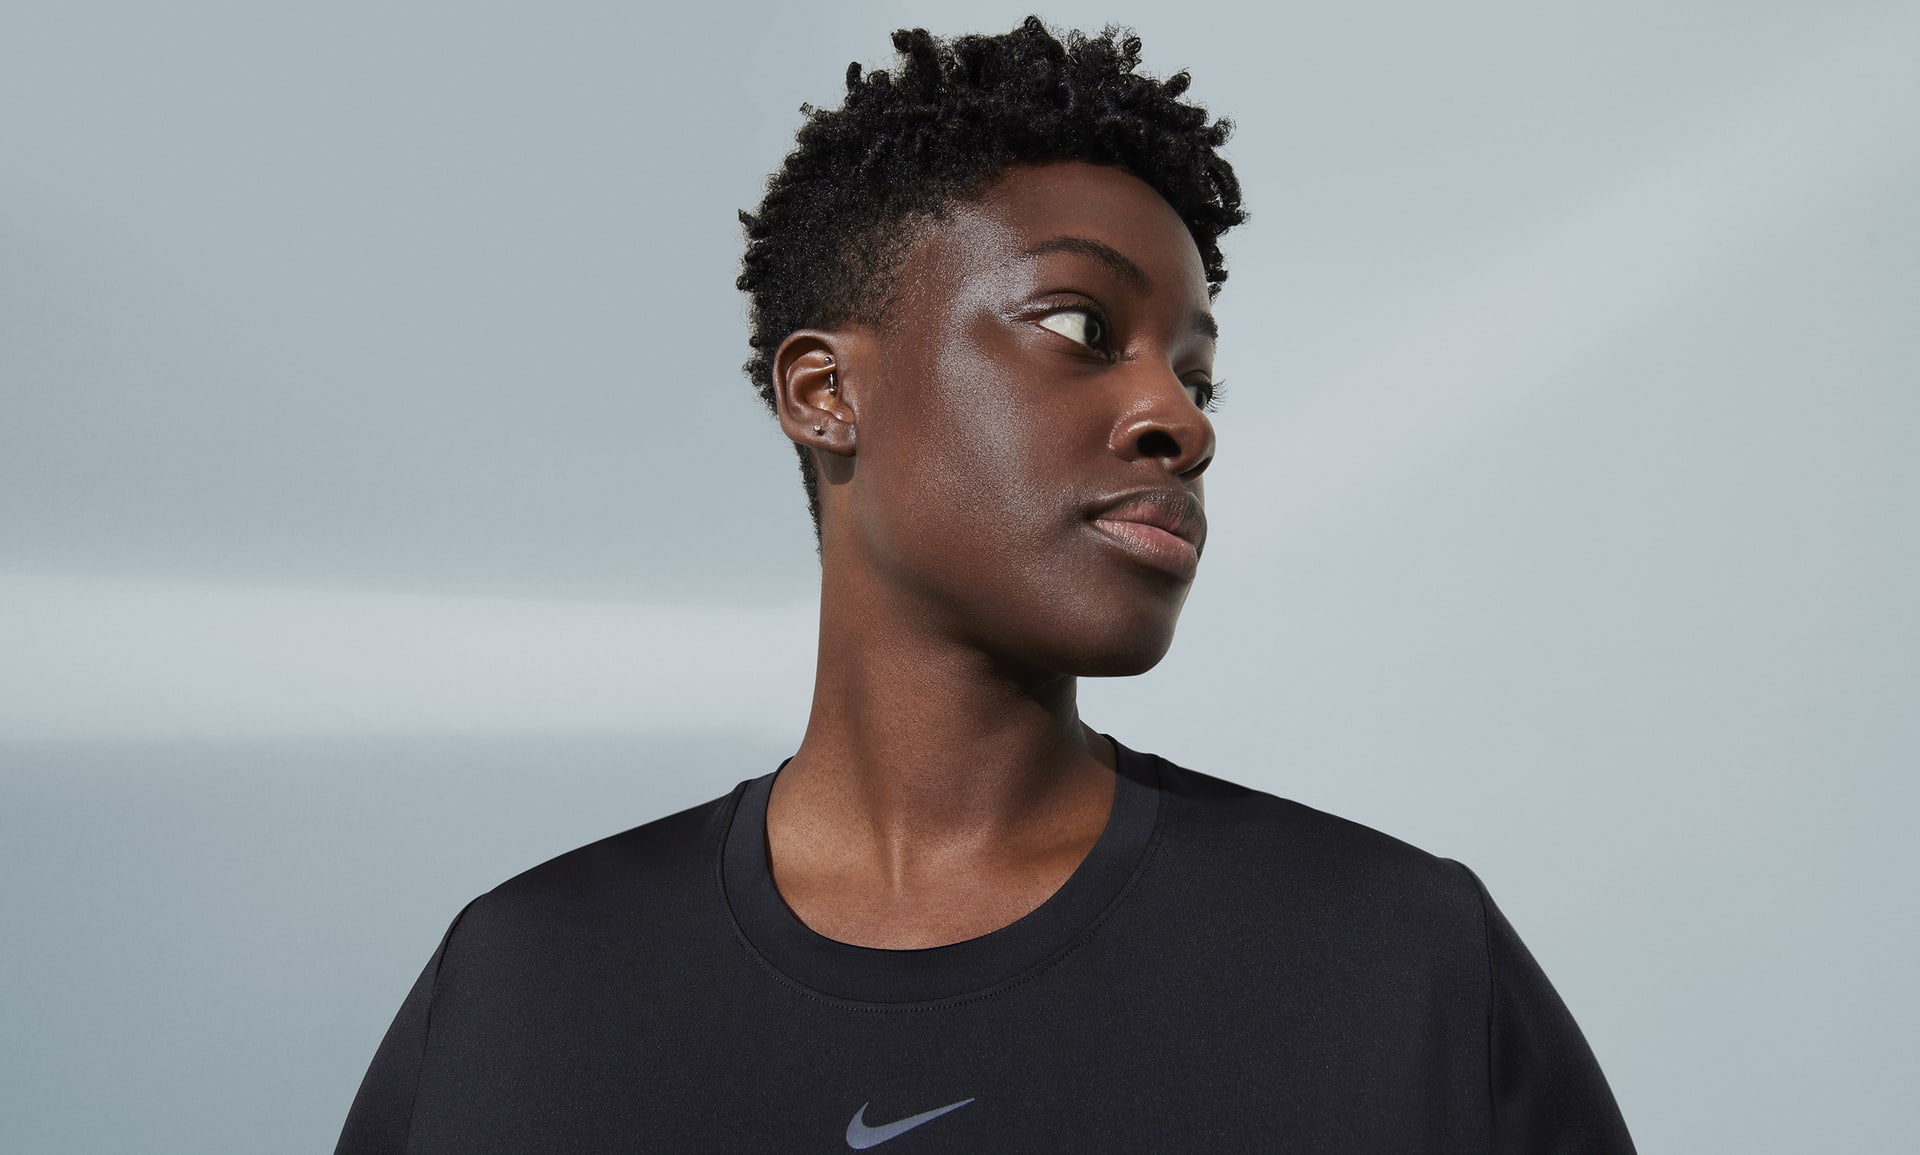 Nike One Classic Women's Dri-FIT Short-Sleeve Top. Nike ID